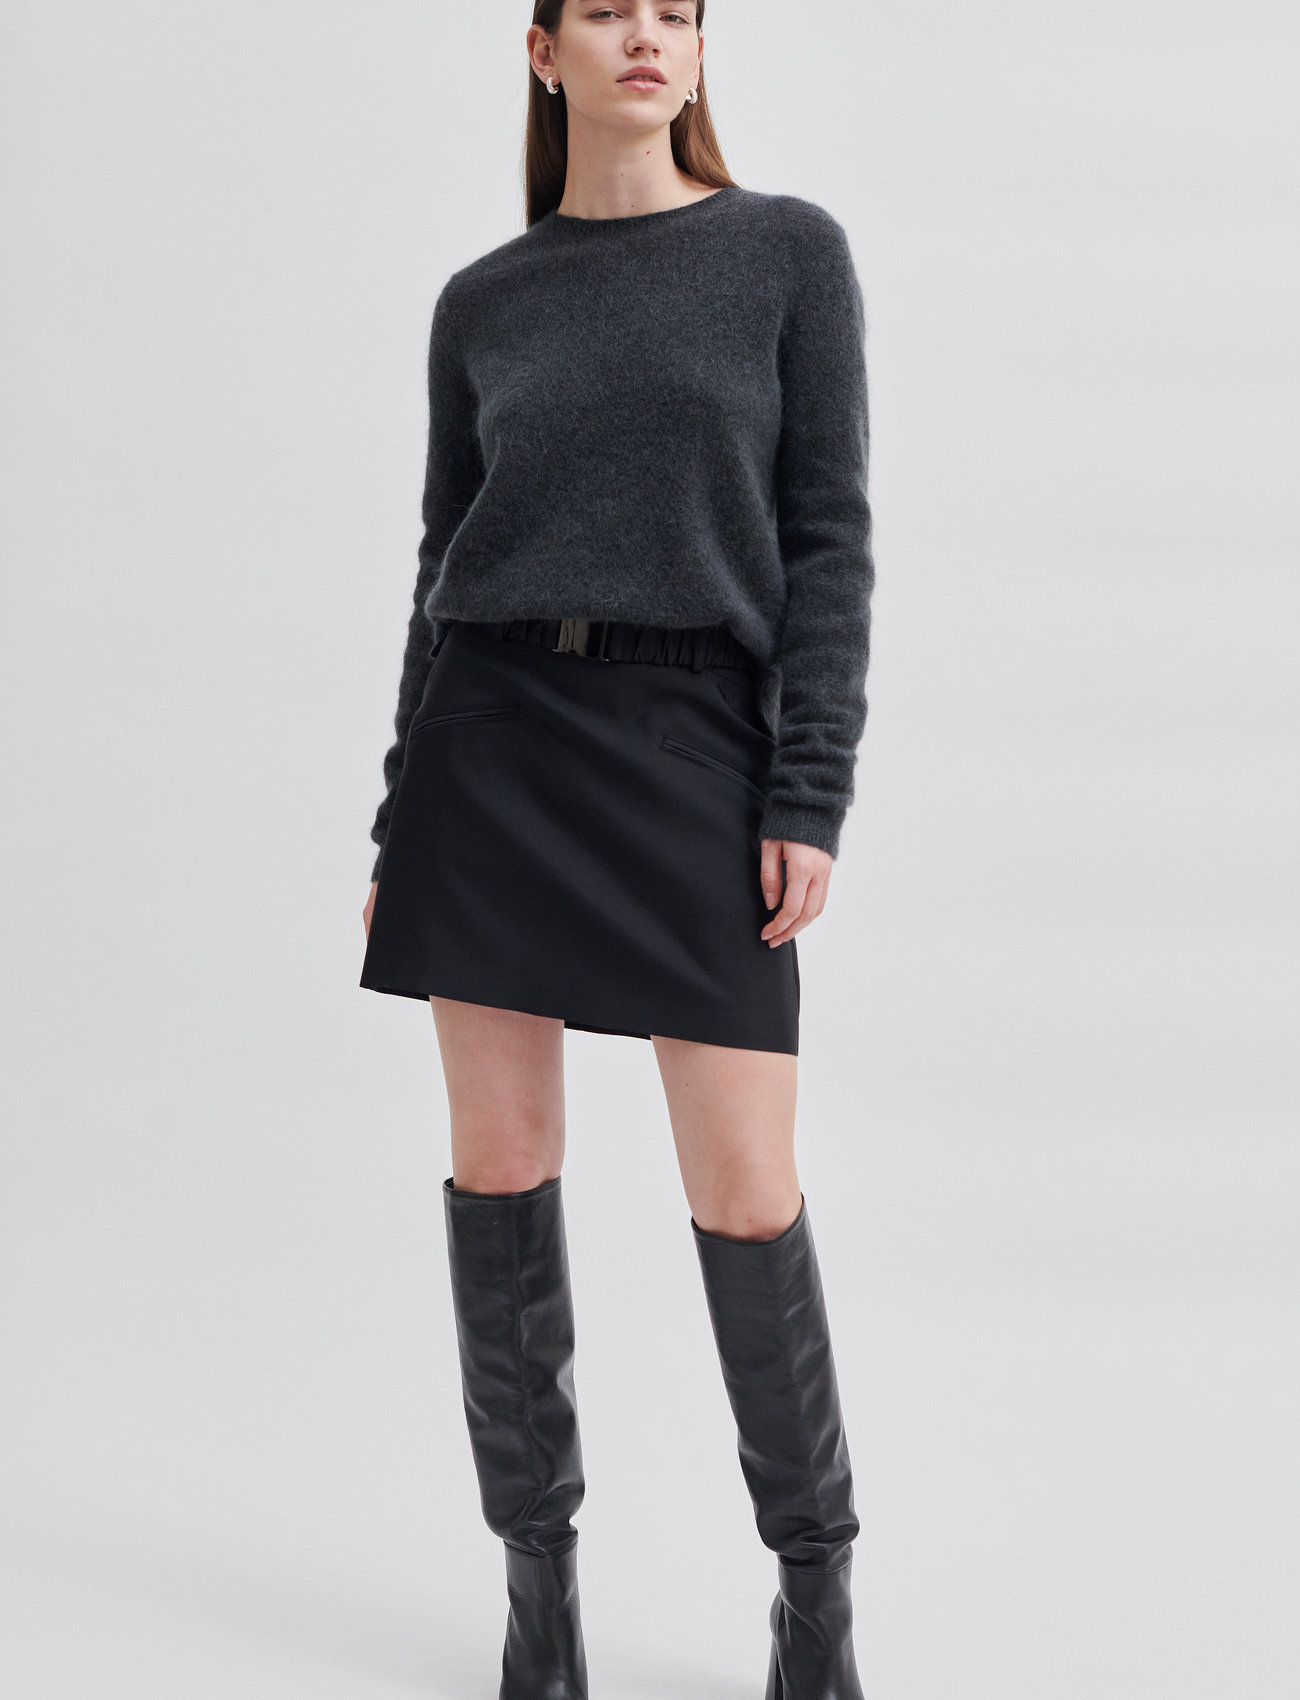 Second Female - Elegance New Skirt - kurze röcke - black - 1